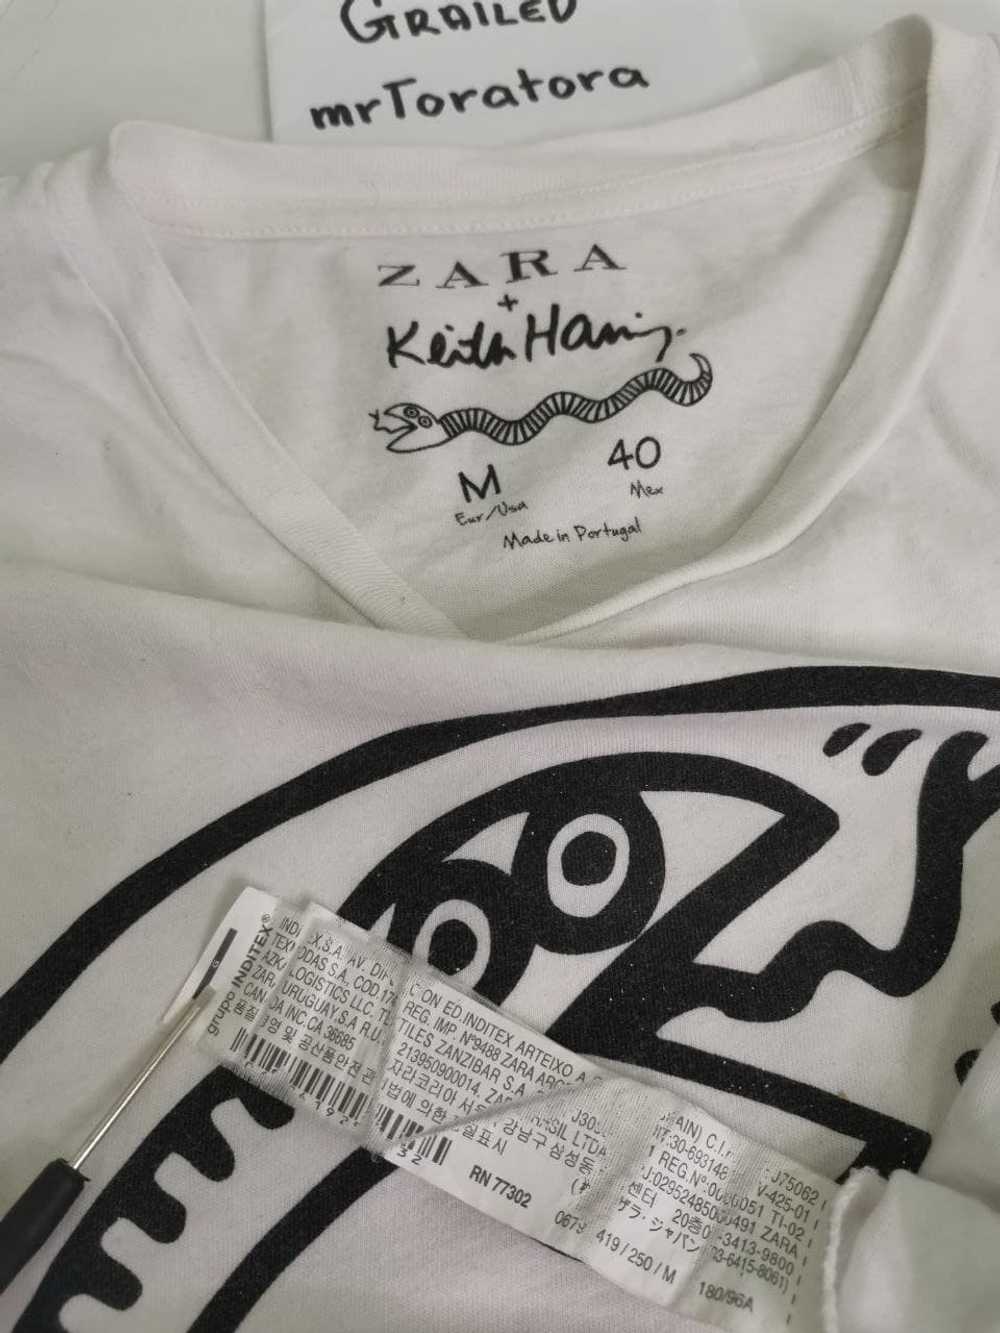 Zara - Zara X Keith Haring Art Rare Design - image 7